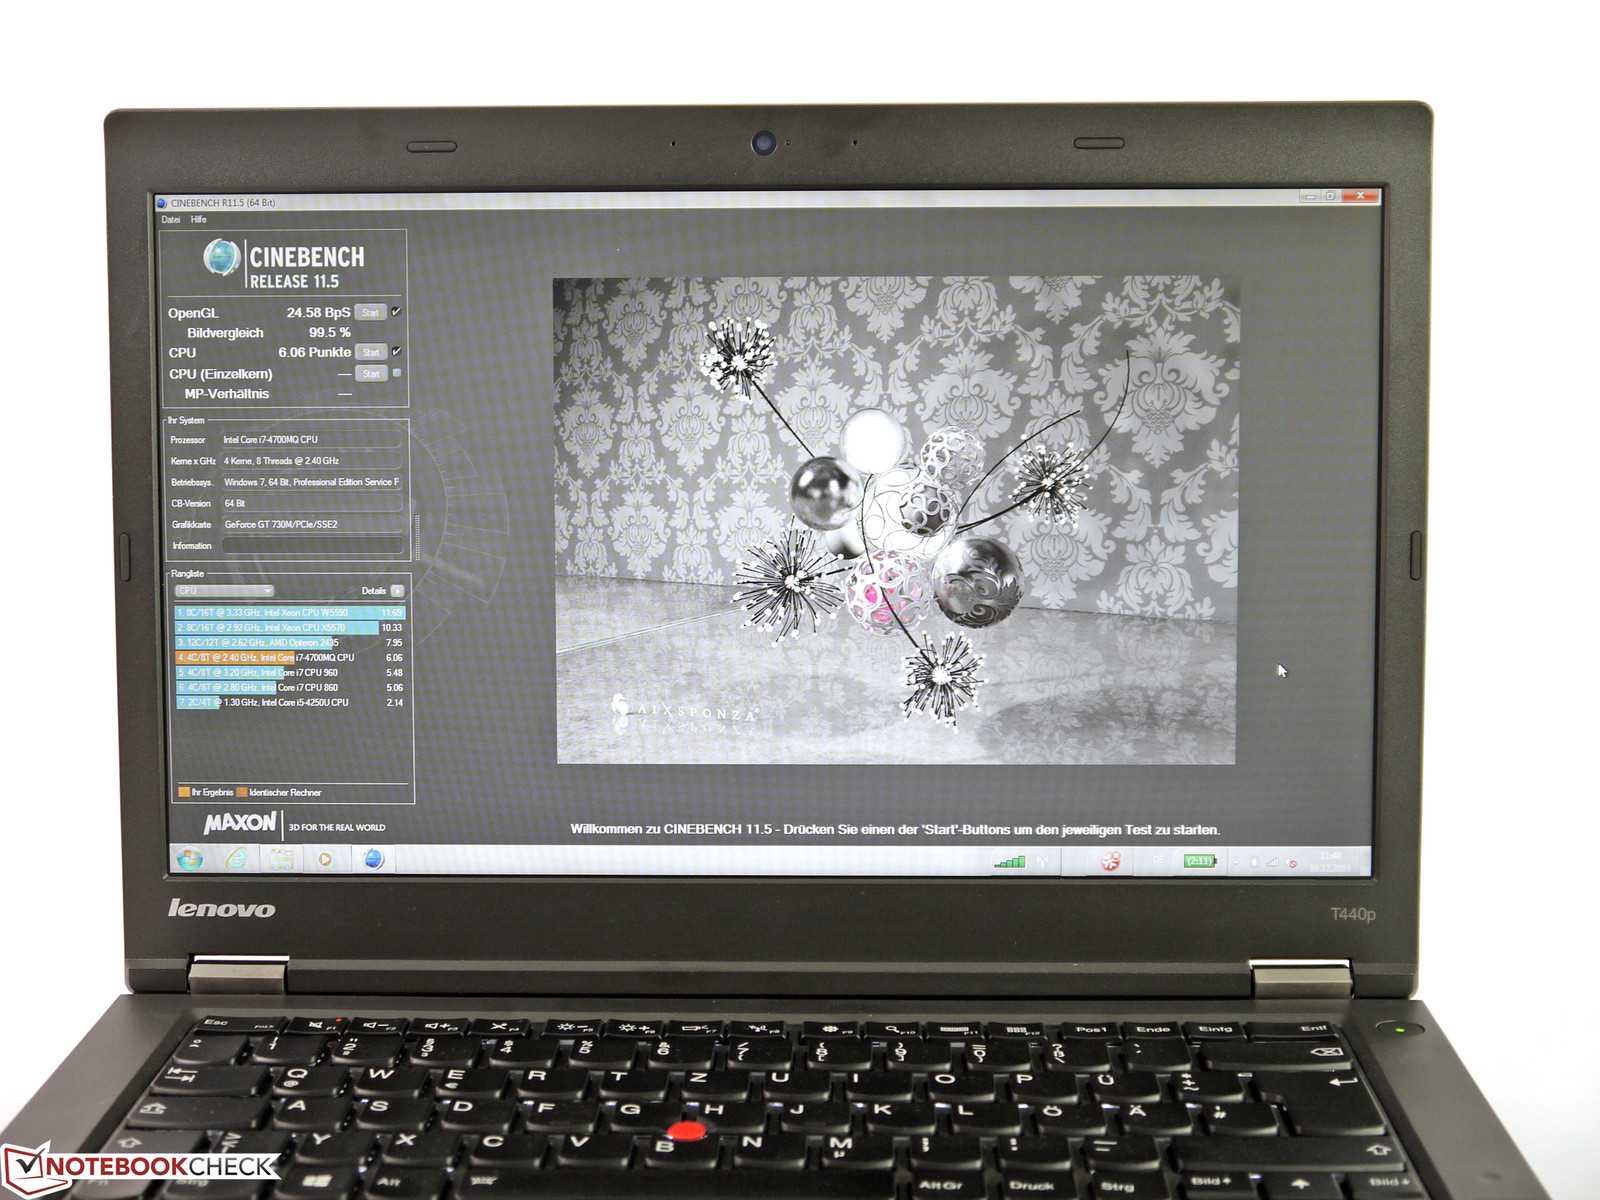 Lenovo thinkpad x121e - описание, характеристики, тест, отзывы, цены, фото